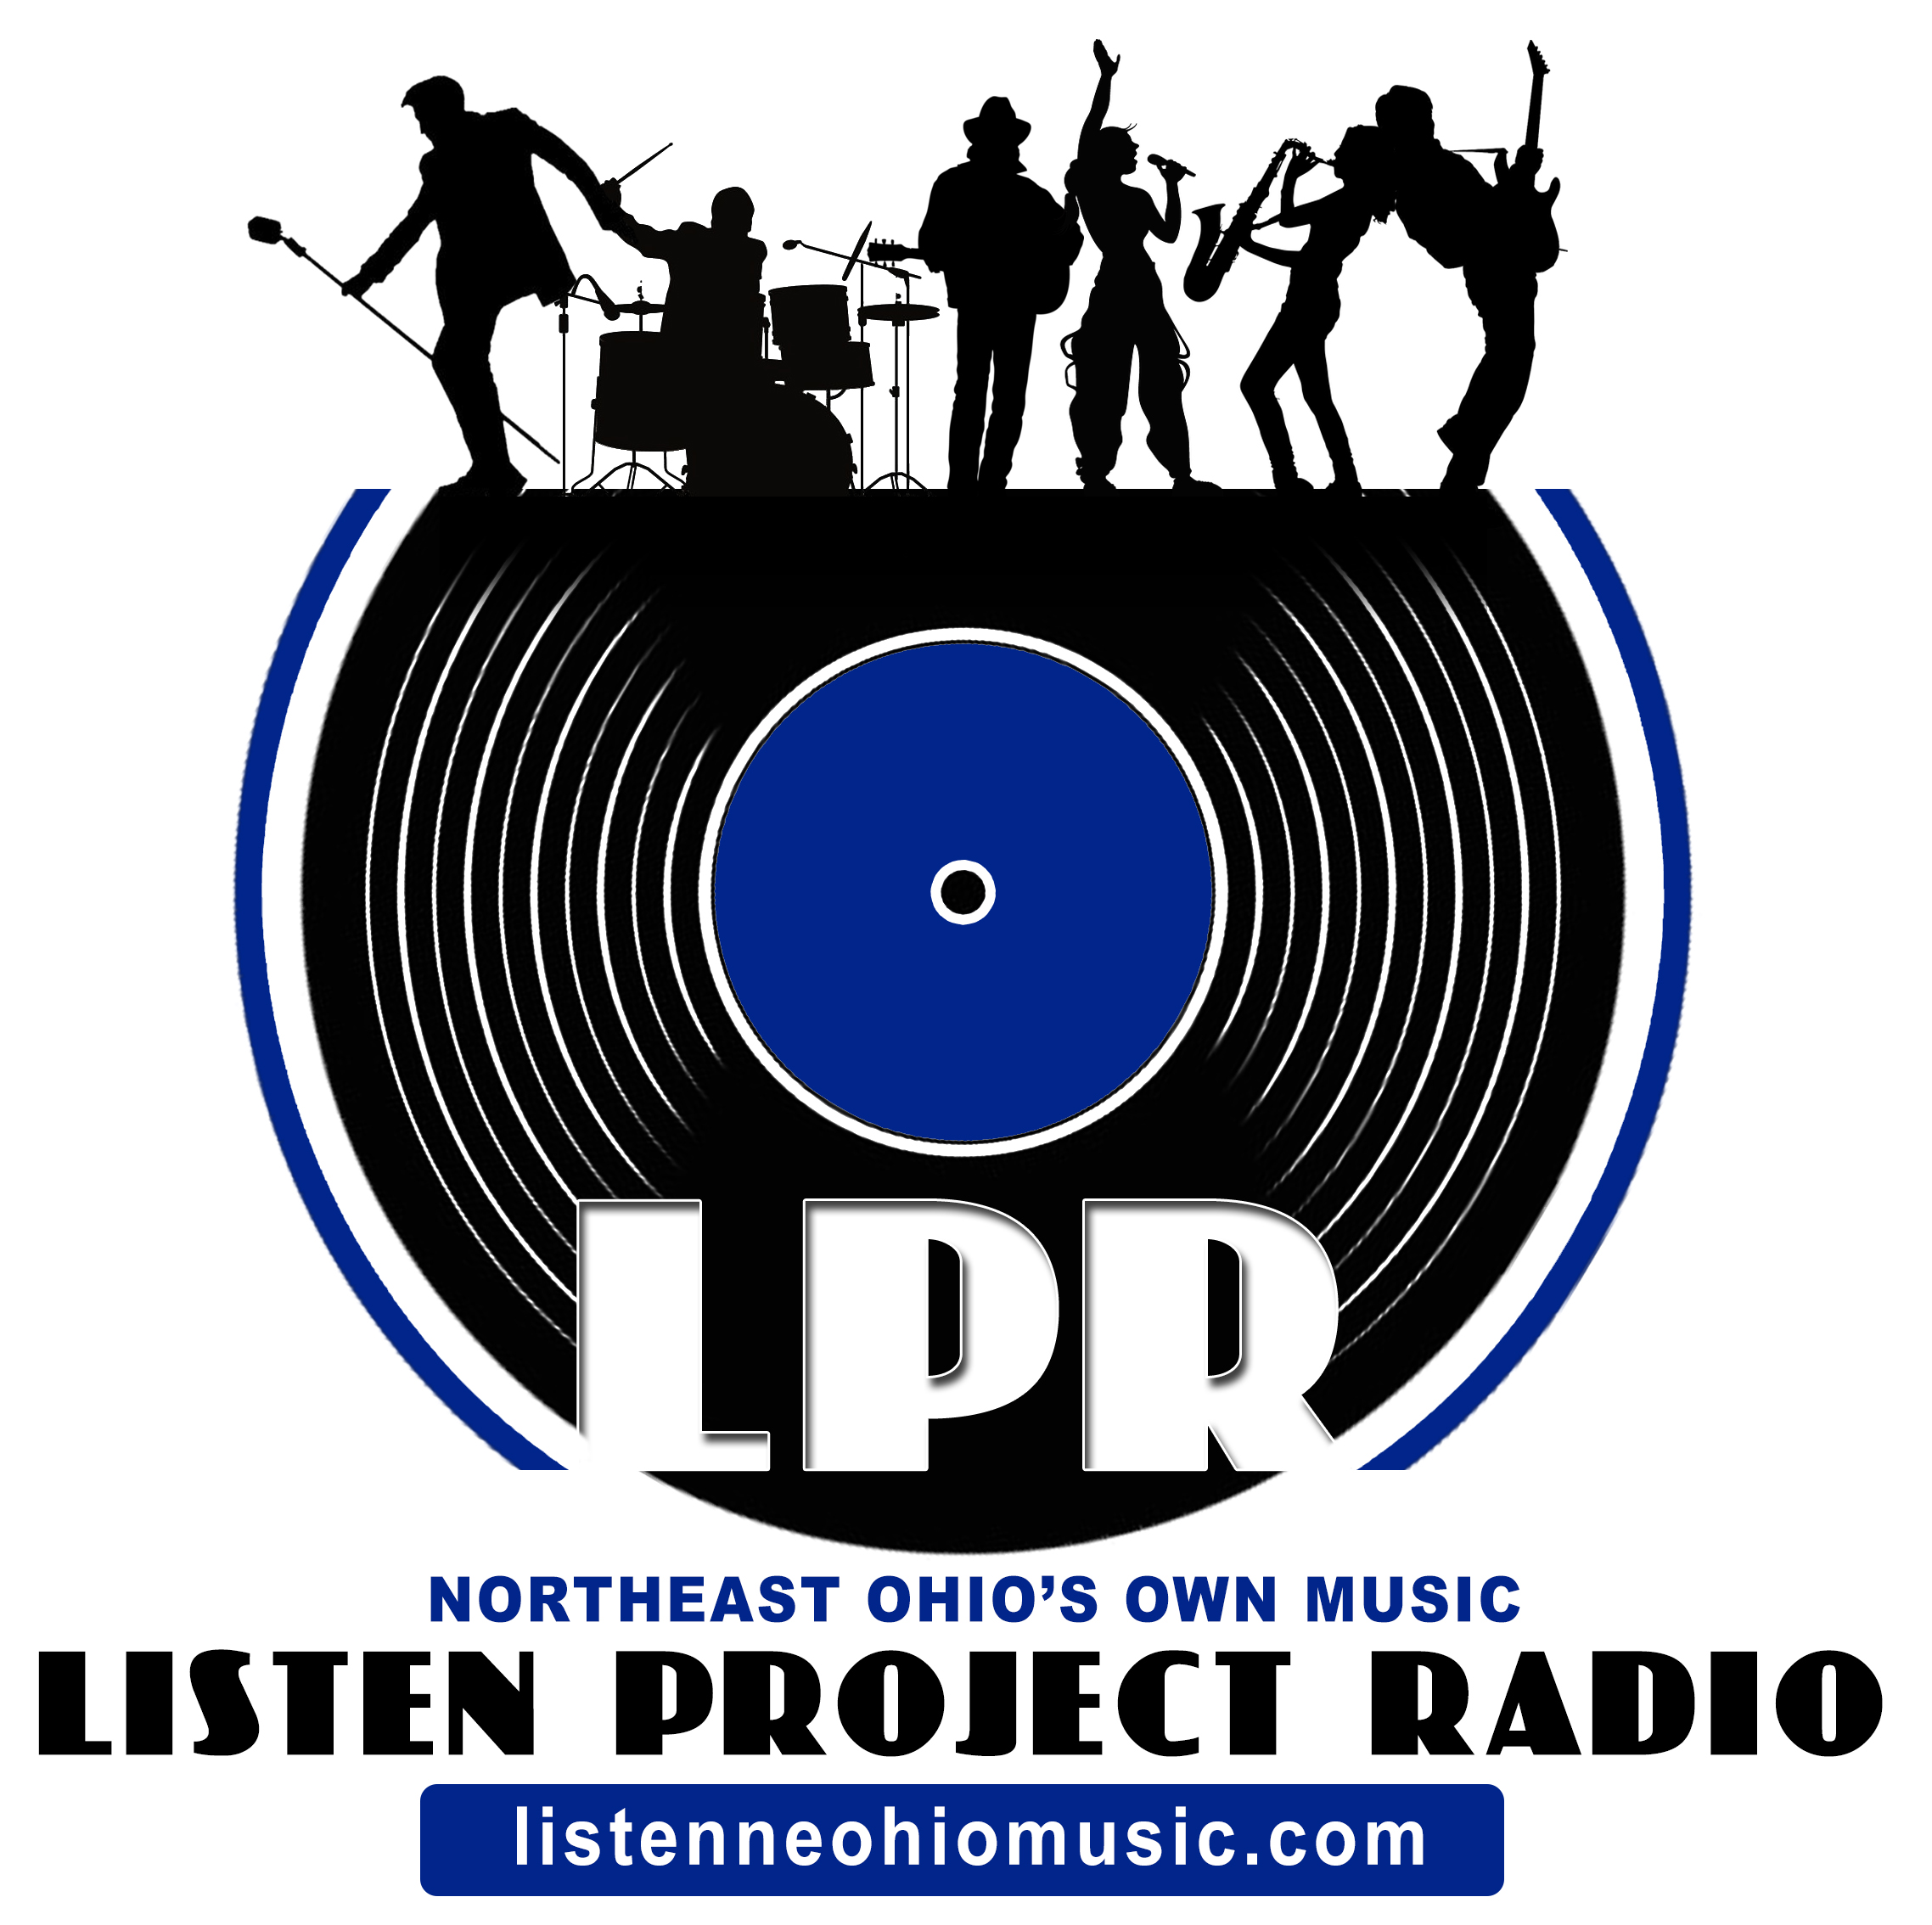 Art for LPR - Listen Project Radio by NE Ohio's OWN Music